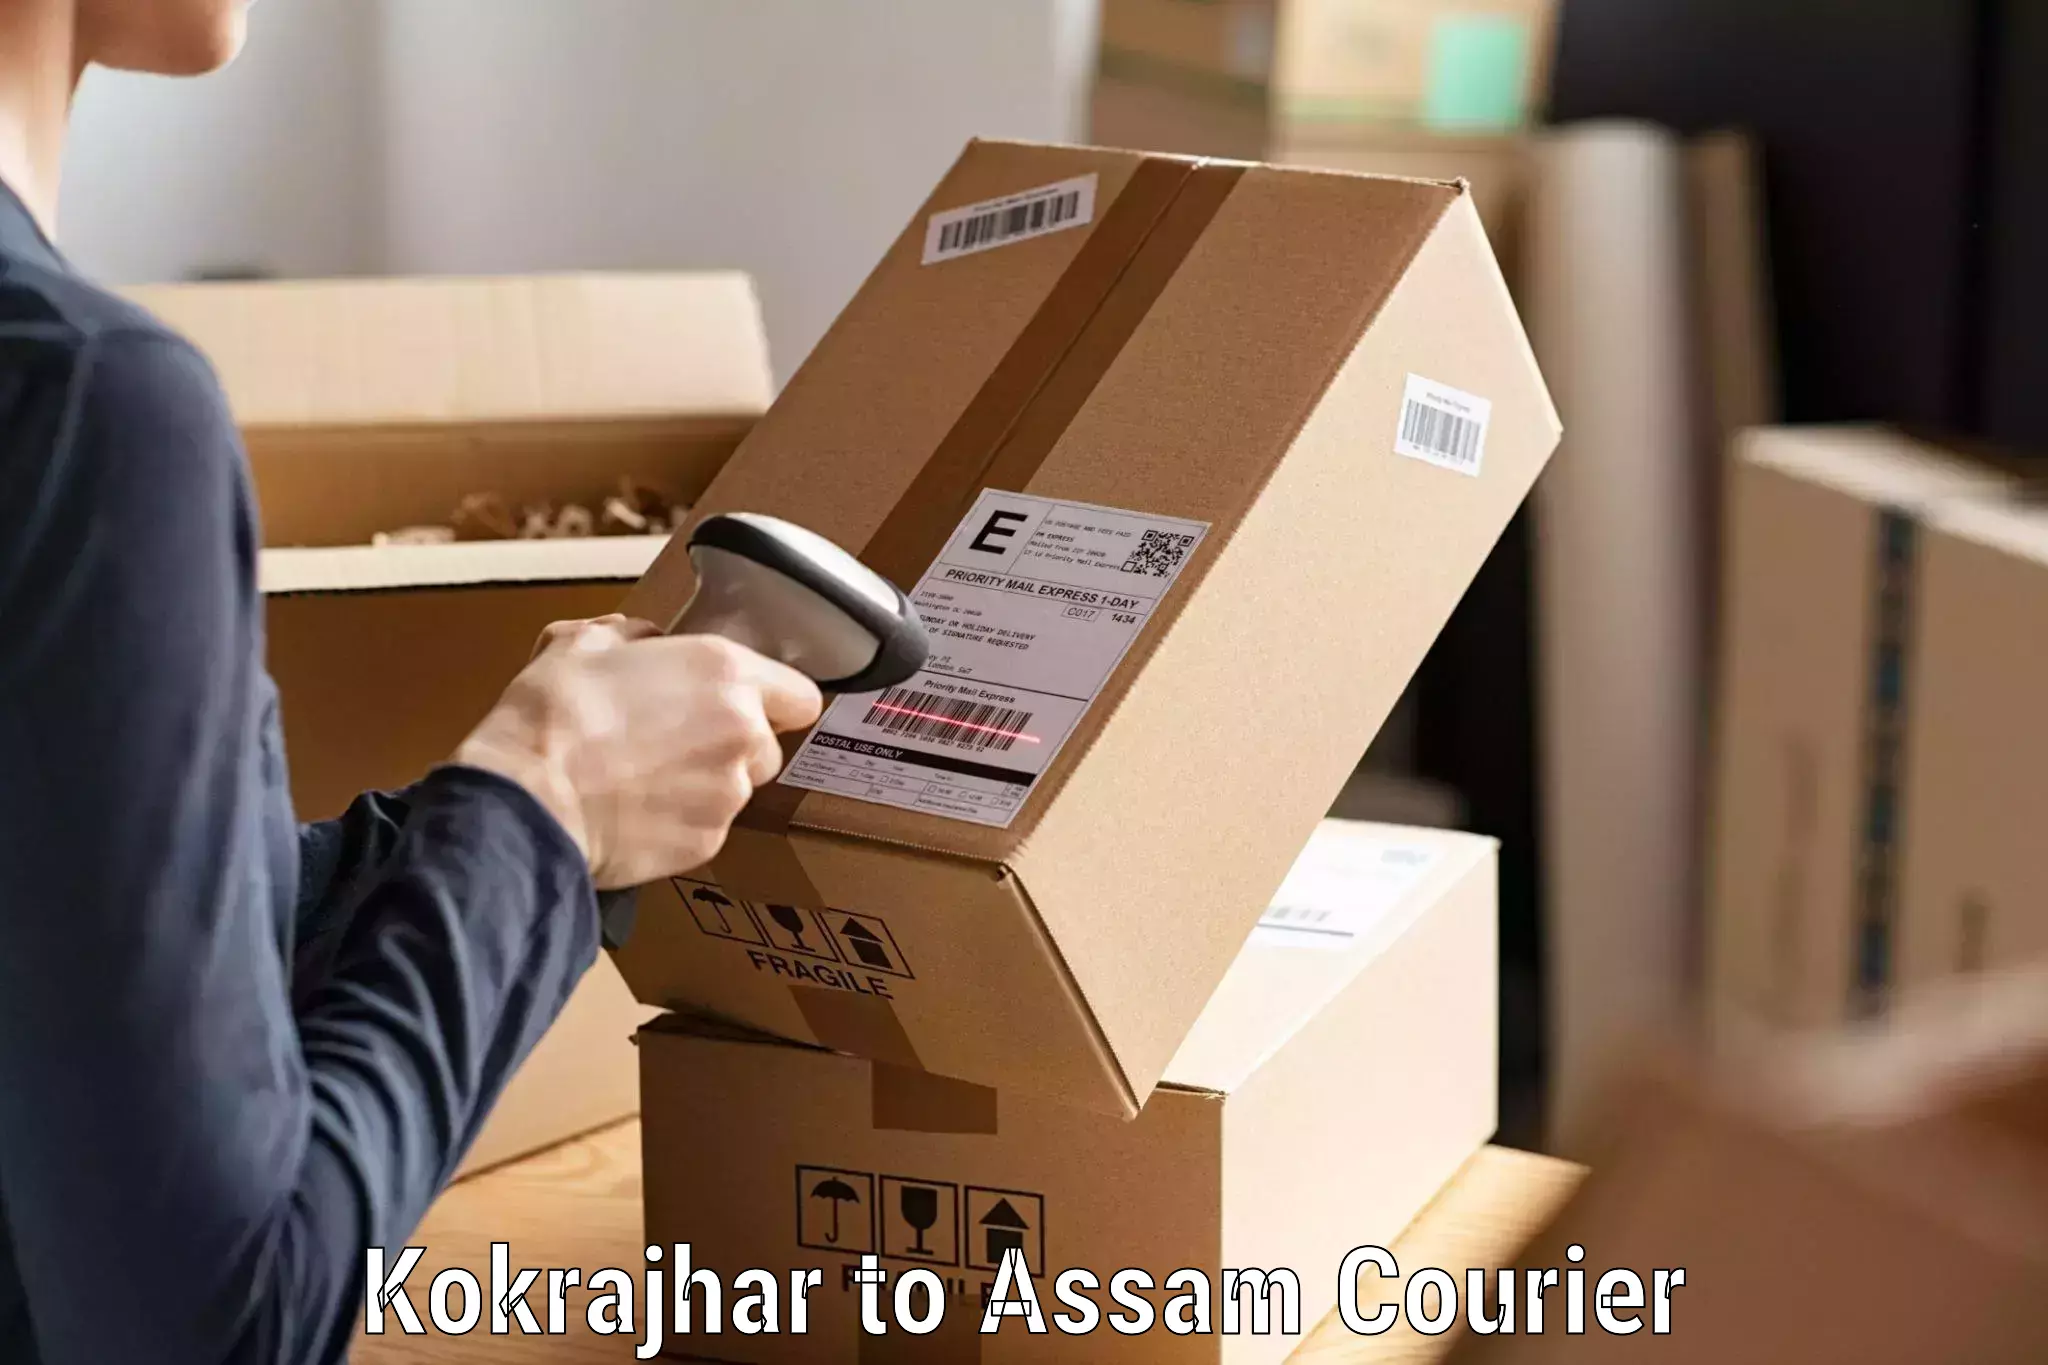 Express delivery capabilities Kokrajhar to Bilasipara